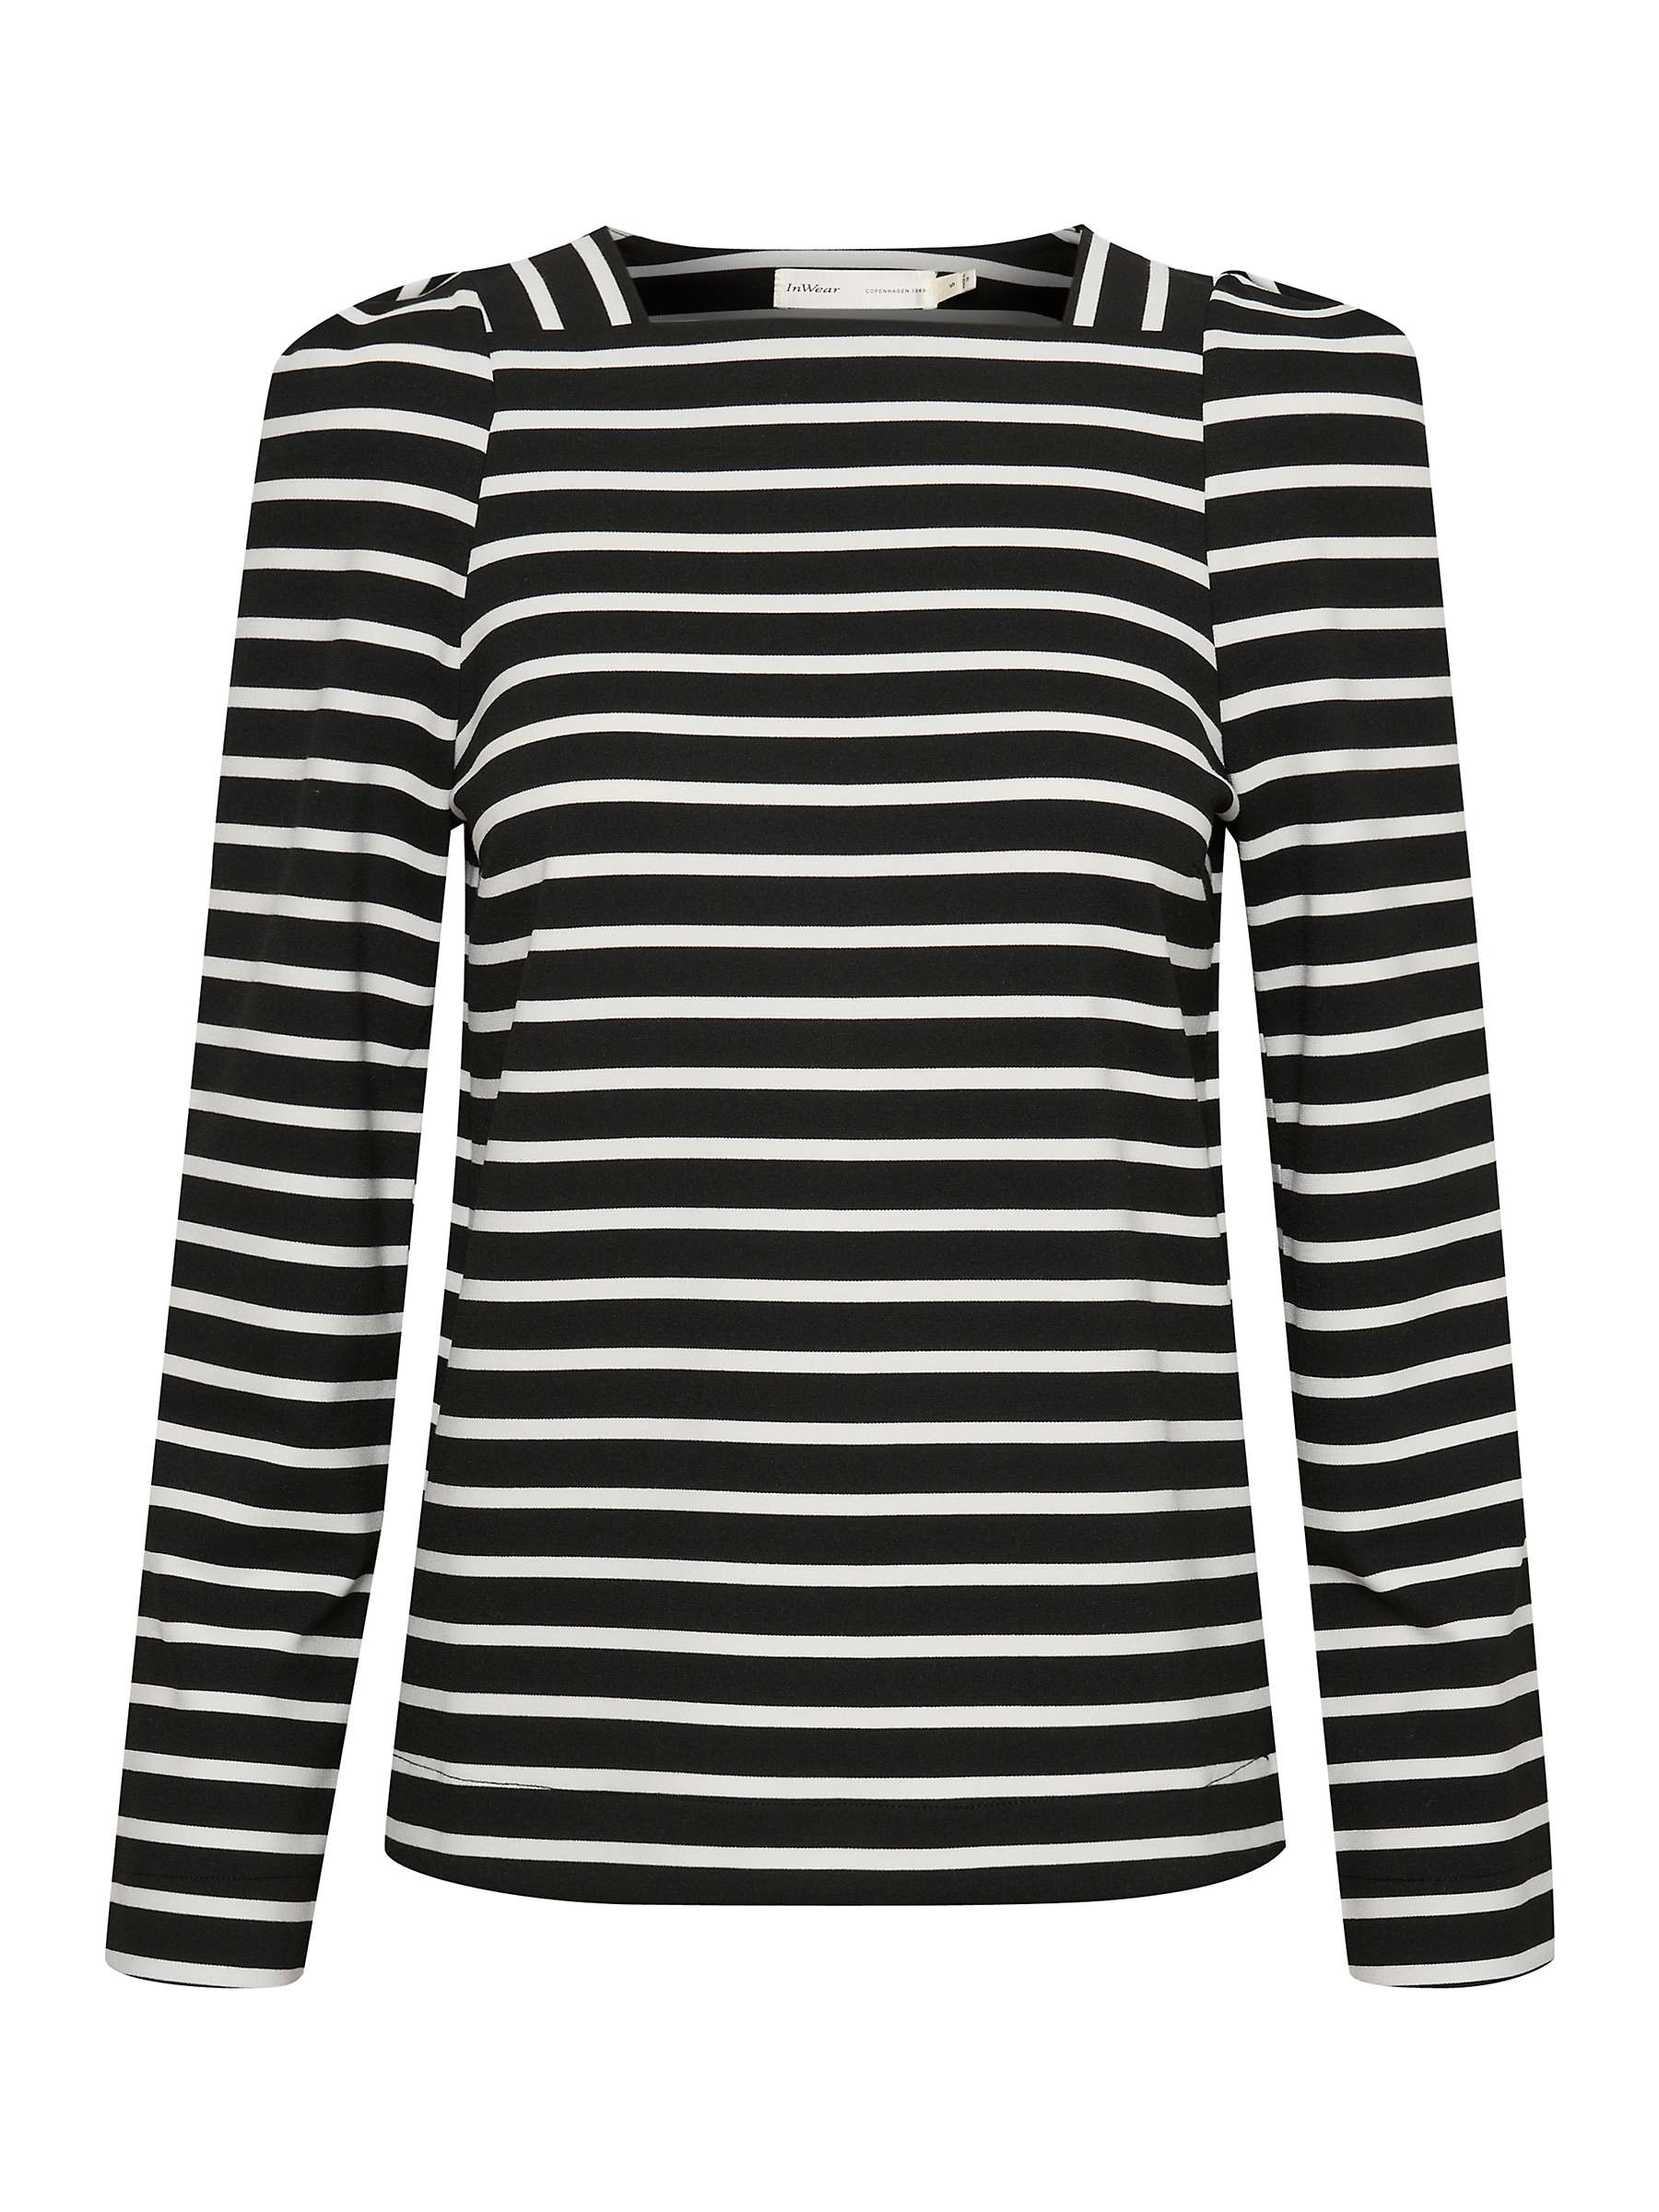 Buy InWear Ruby Stripe Top, Black/White Online at johnlewis.com